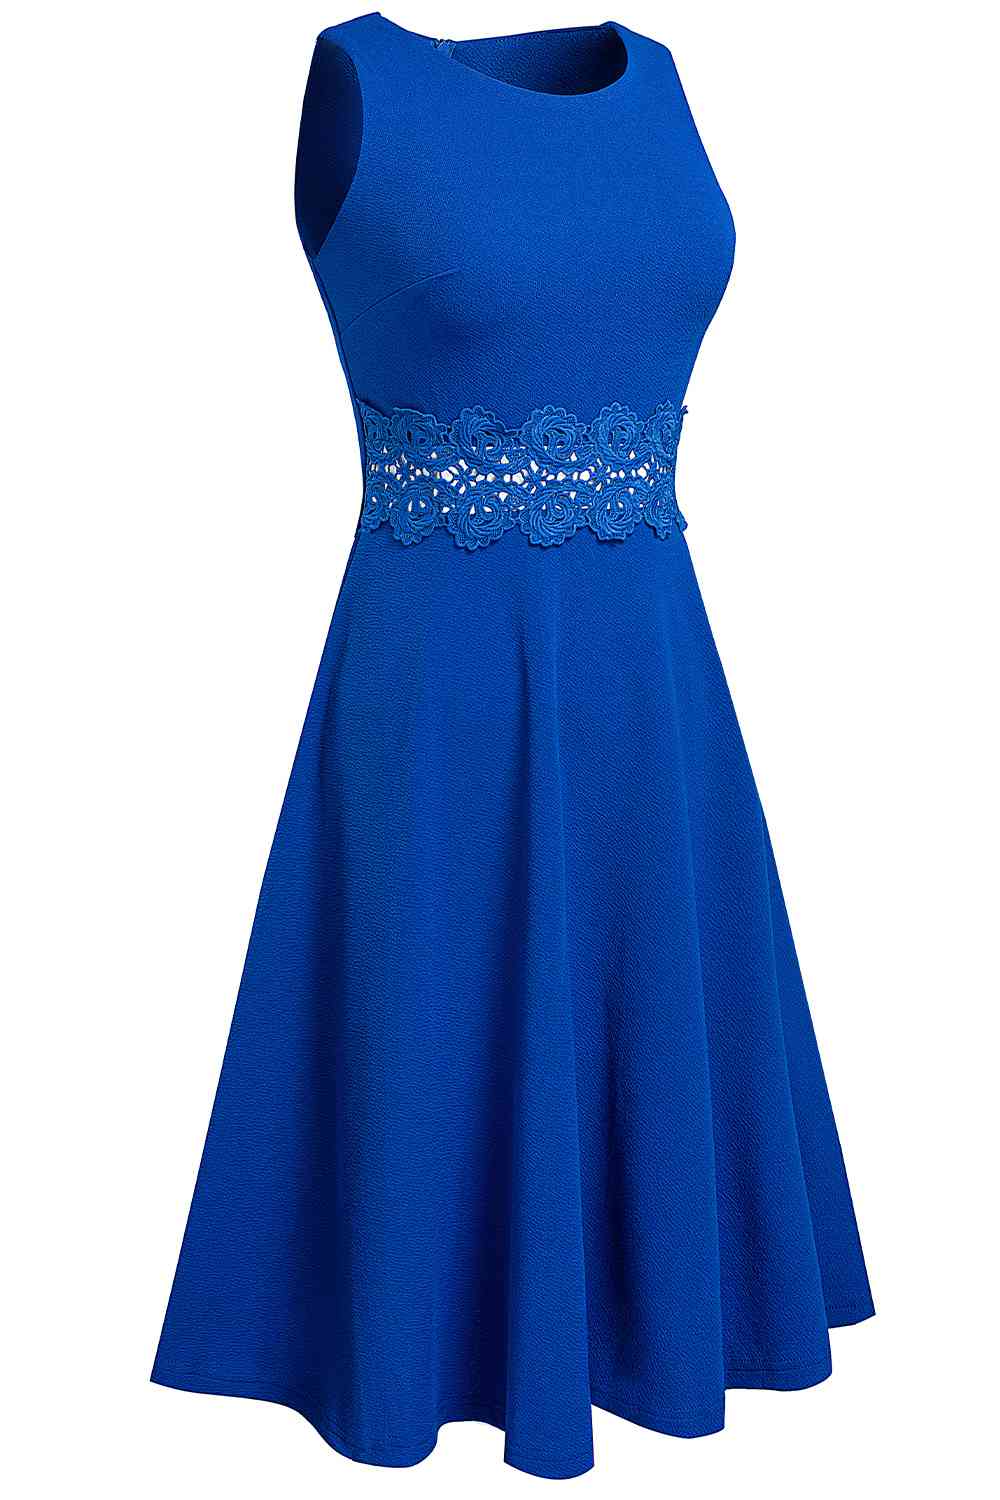 Round Neck Sleeveless Lace Trim Dress - All Dresses - Dresses - 11 - 2024